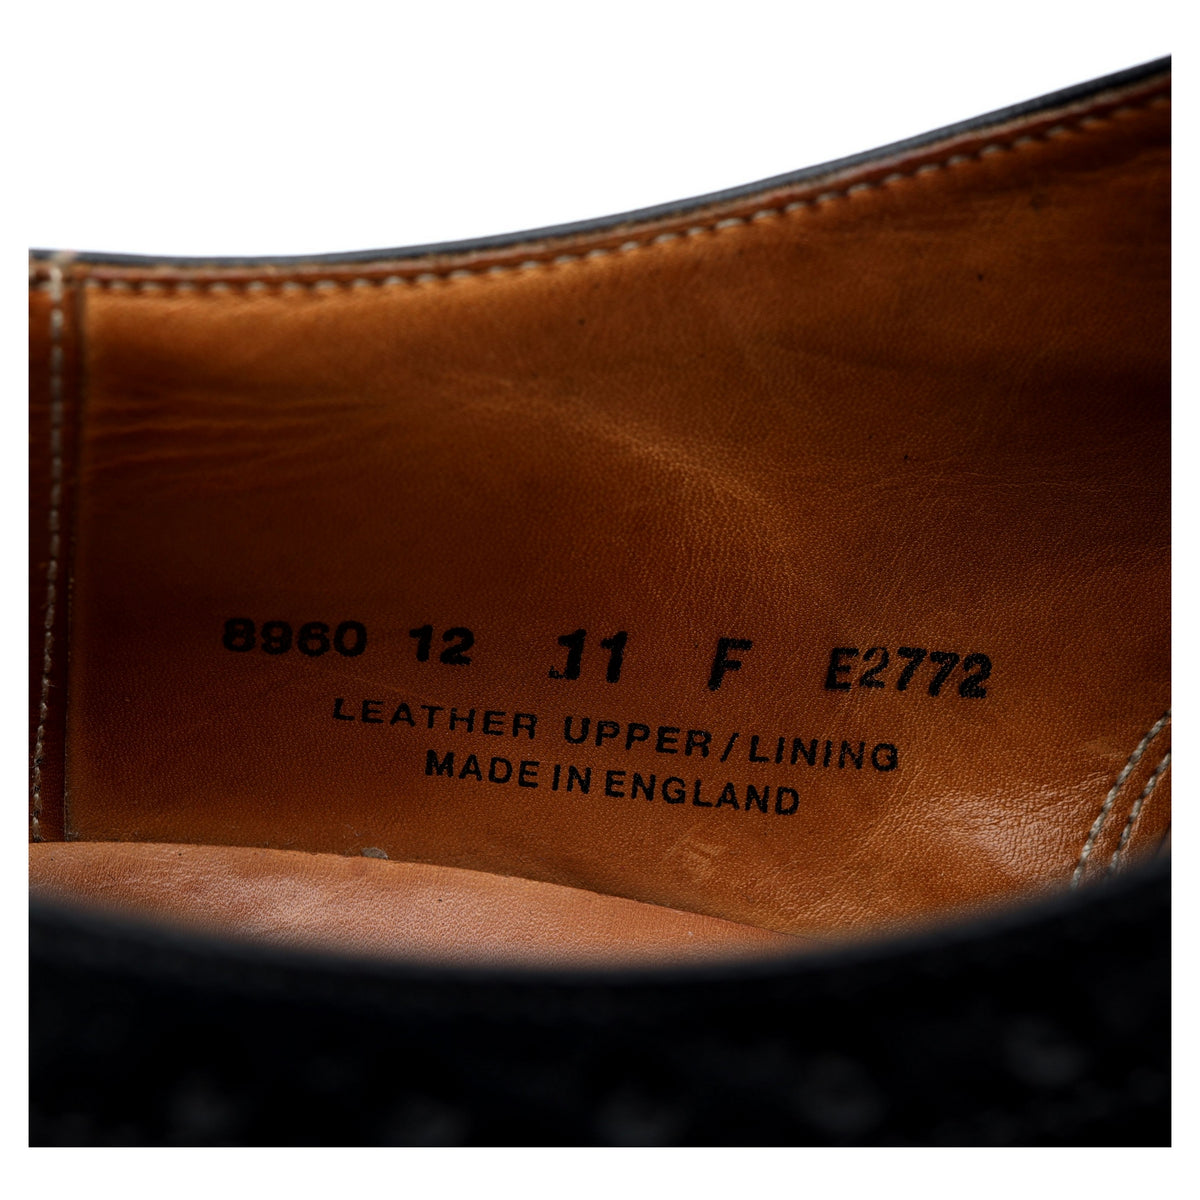 Black Leather Oxford Semi Brogues UK 11 F